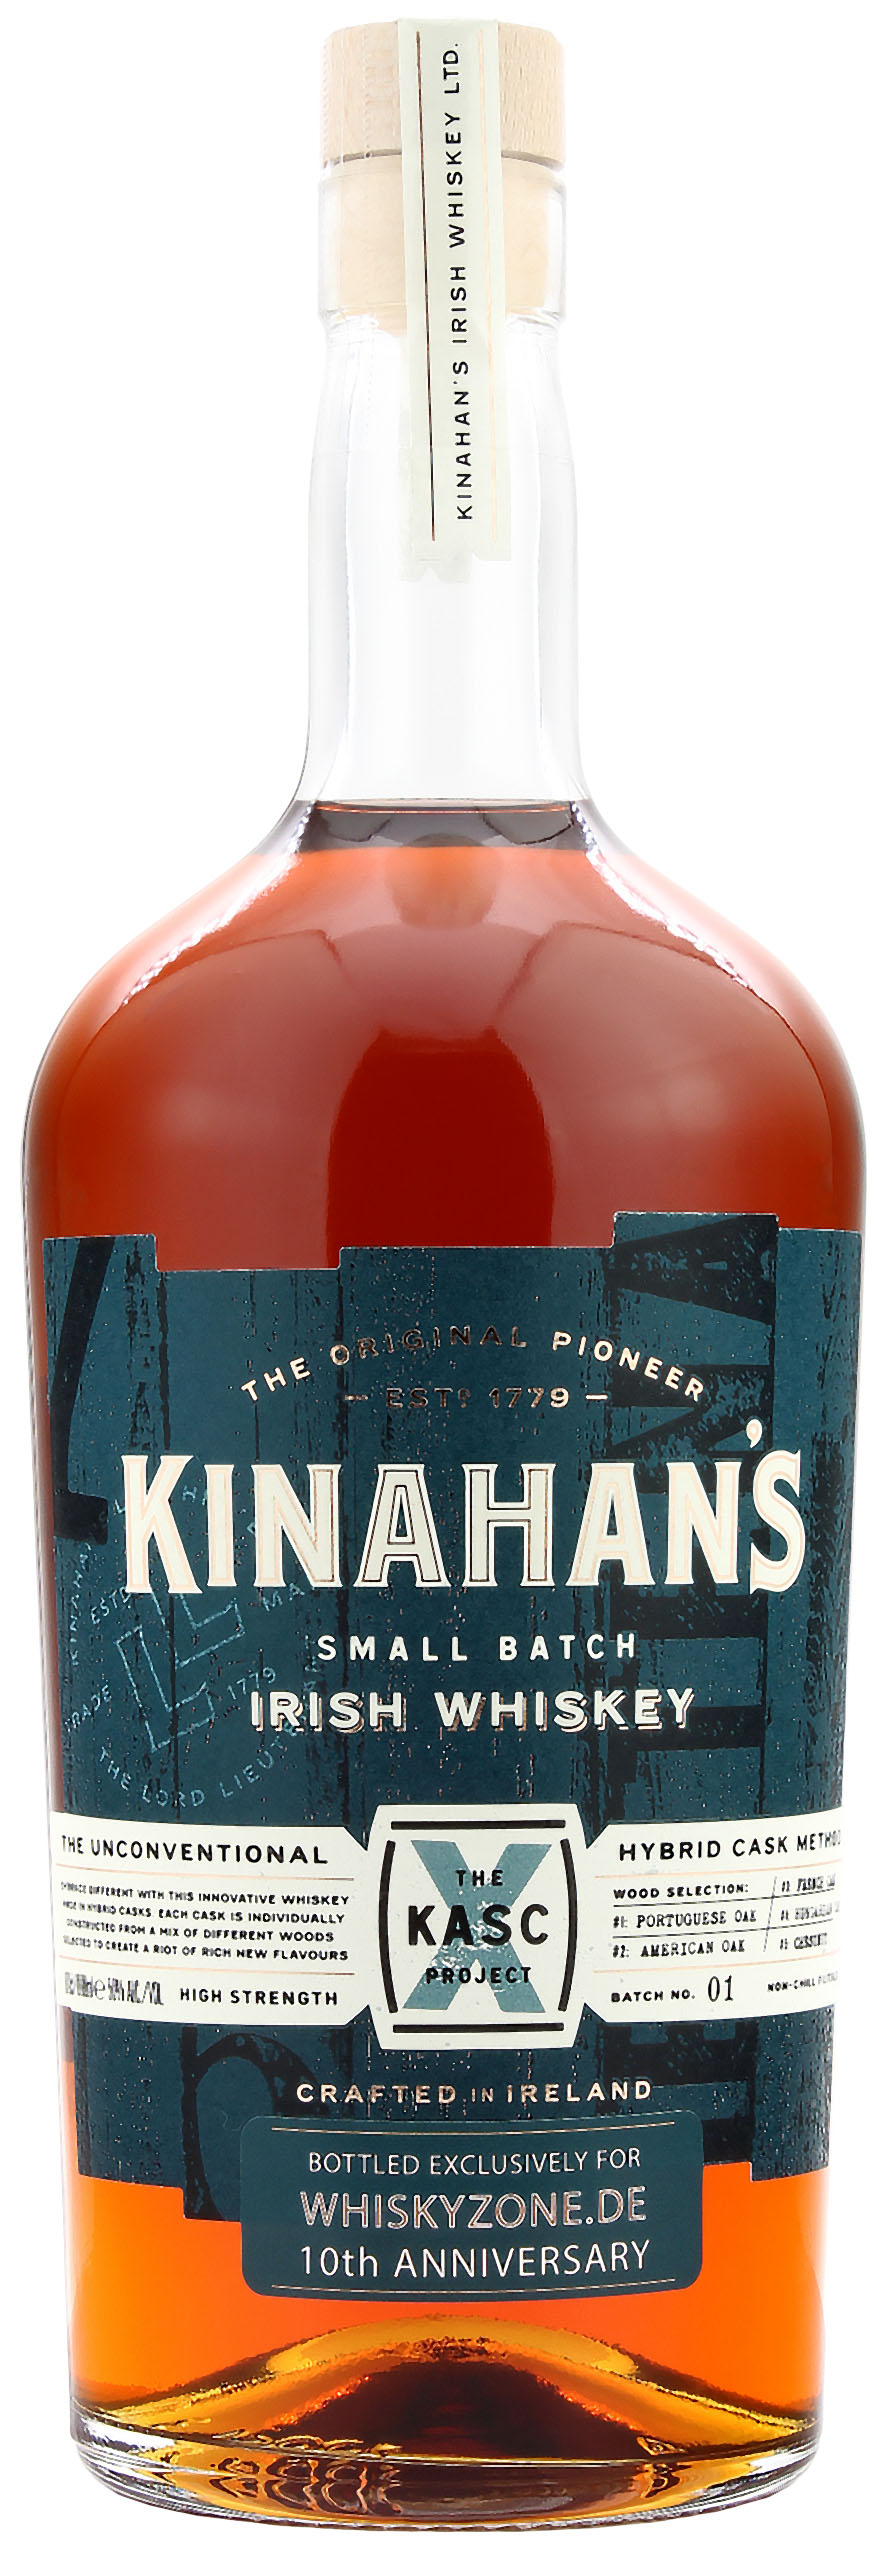 Kinahan's Kasc Project X Small Batch Irish Whiskey Whiskyzone exklusiv 50.0% 1l